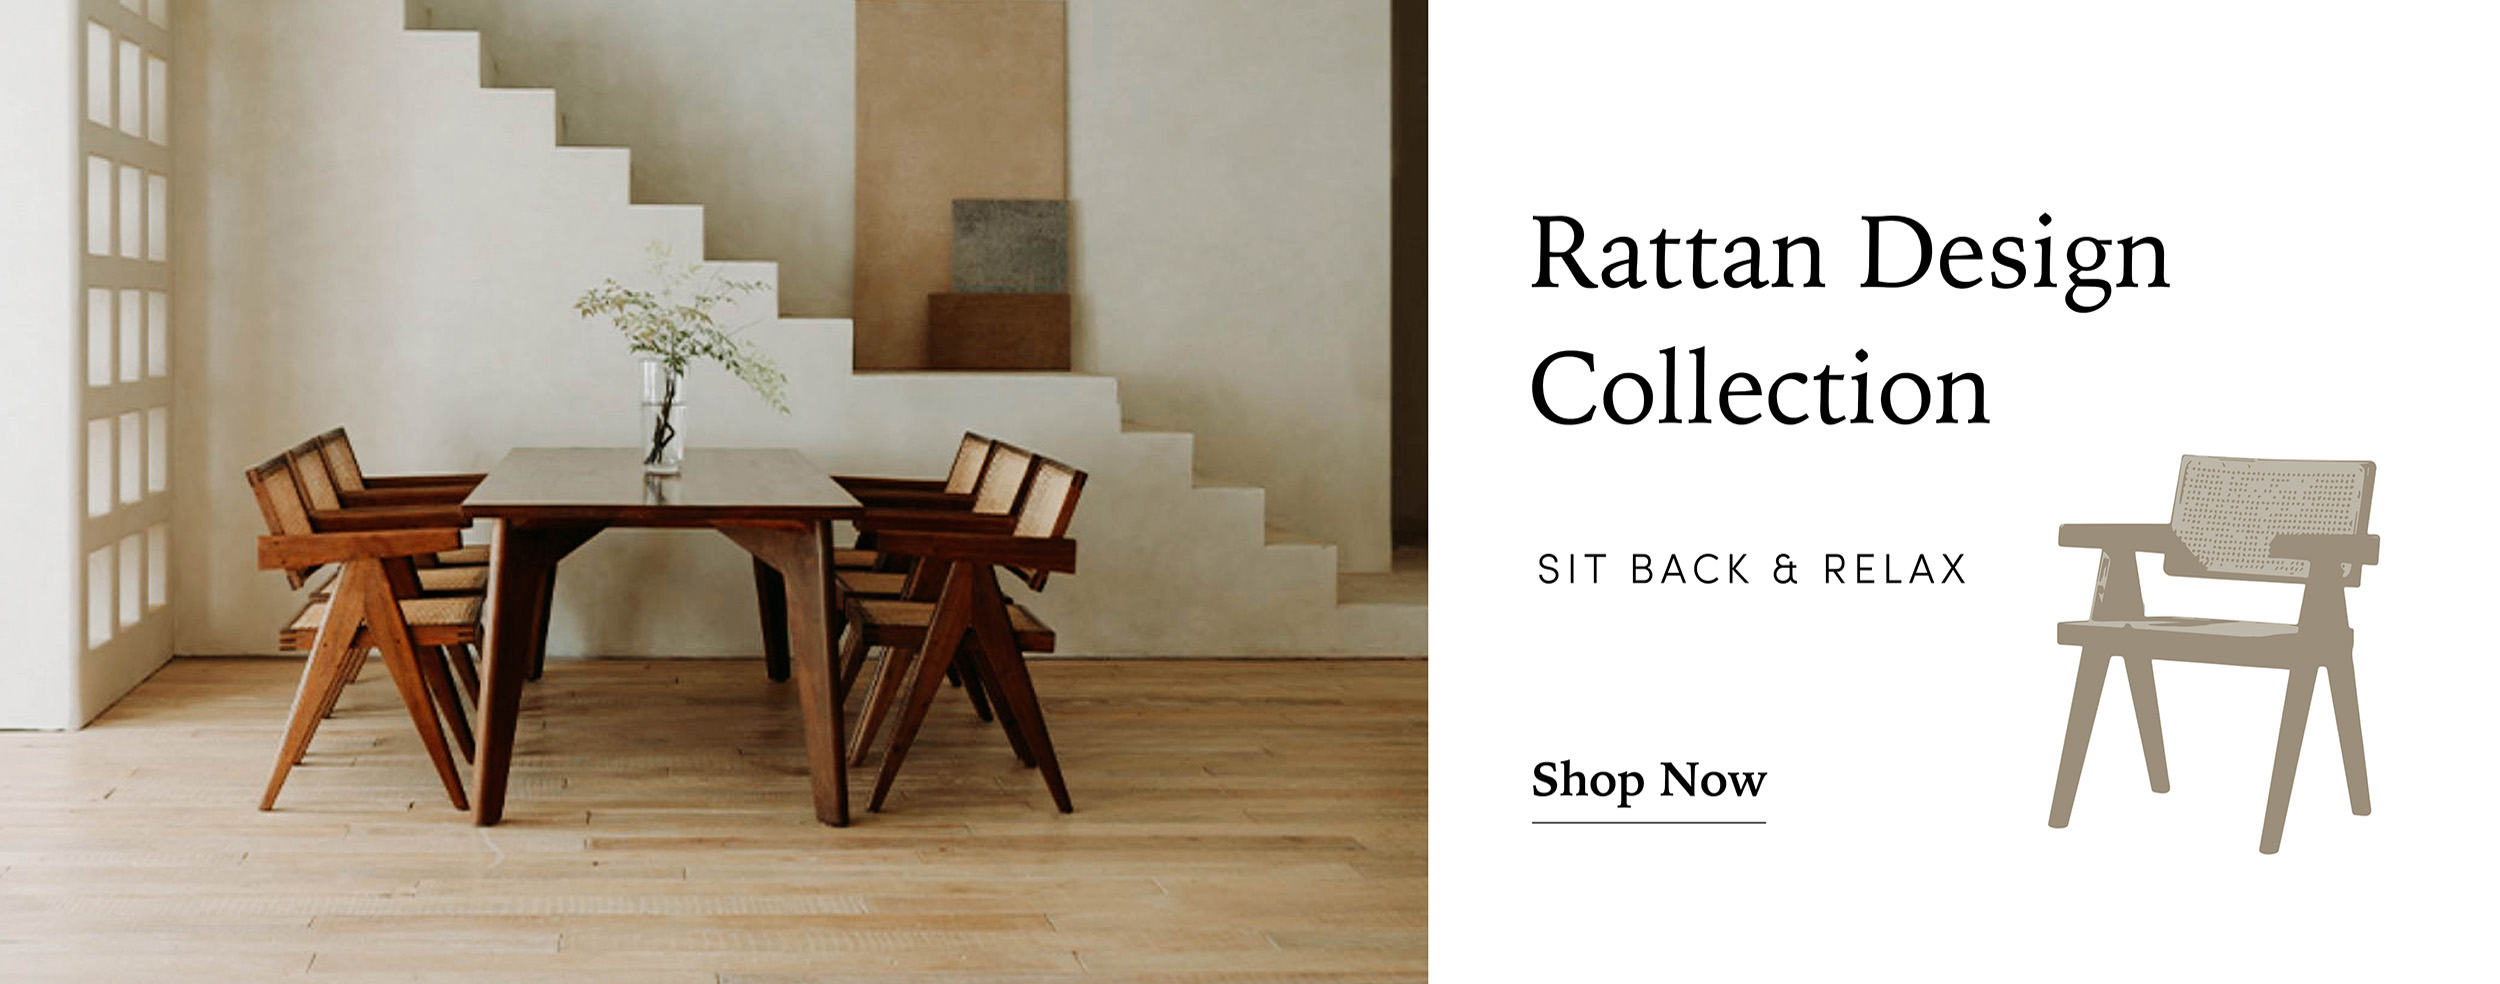 Rattan Design Collection